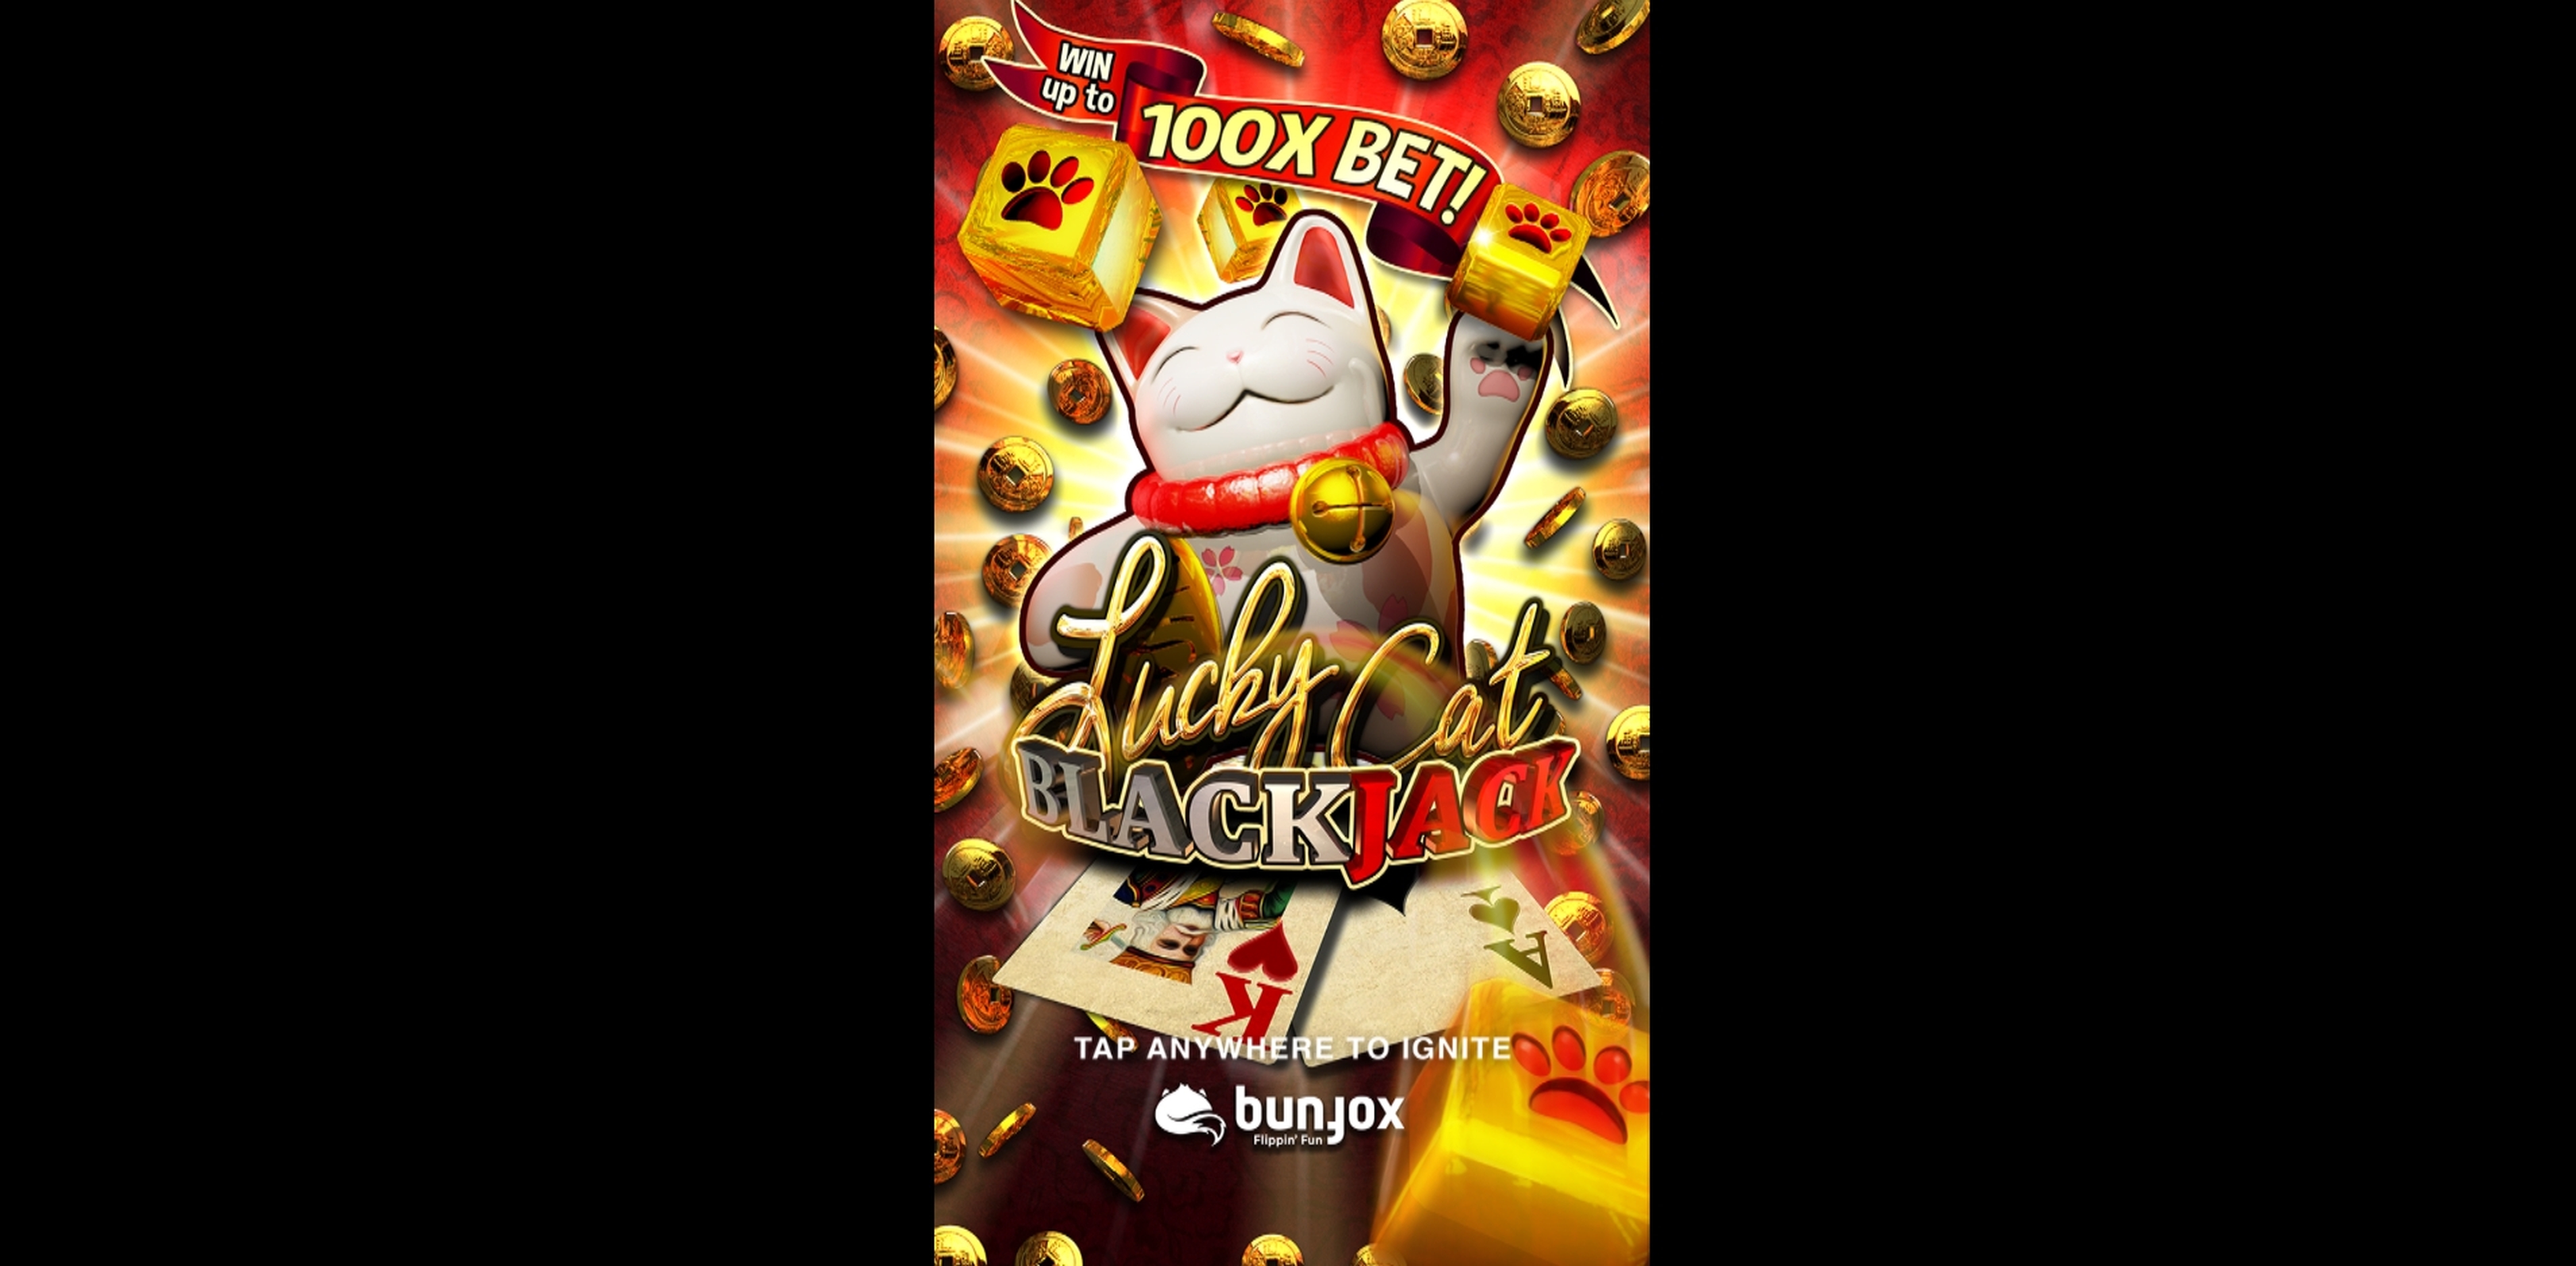 Play Lucky Cat Blackjack Free Casino Slot Game by Bunfox Games